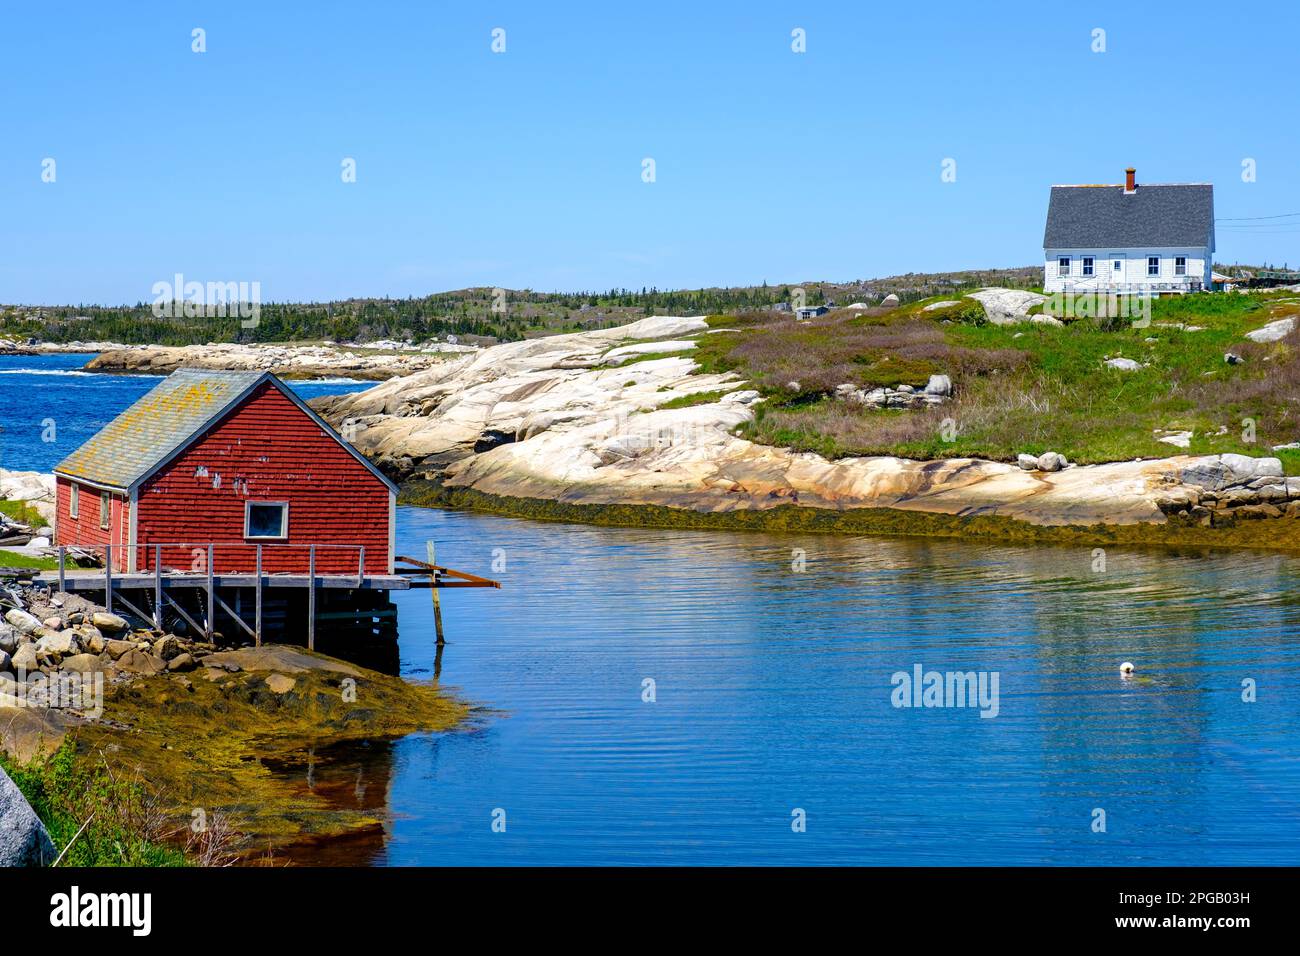 Peggy's Cove fishing village fishermen's houses by the ocean, Nova Scotia, Maritimes, Canada Stock Photo